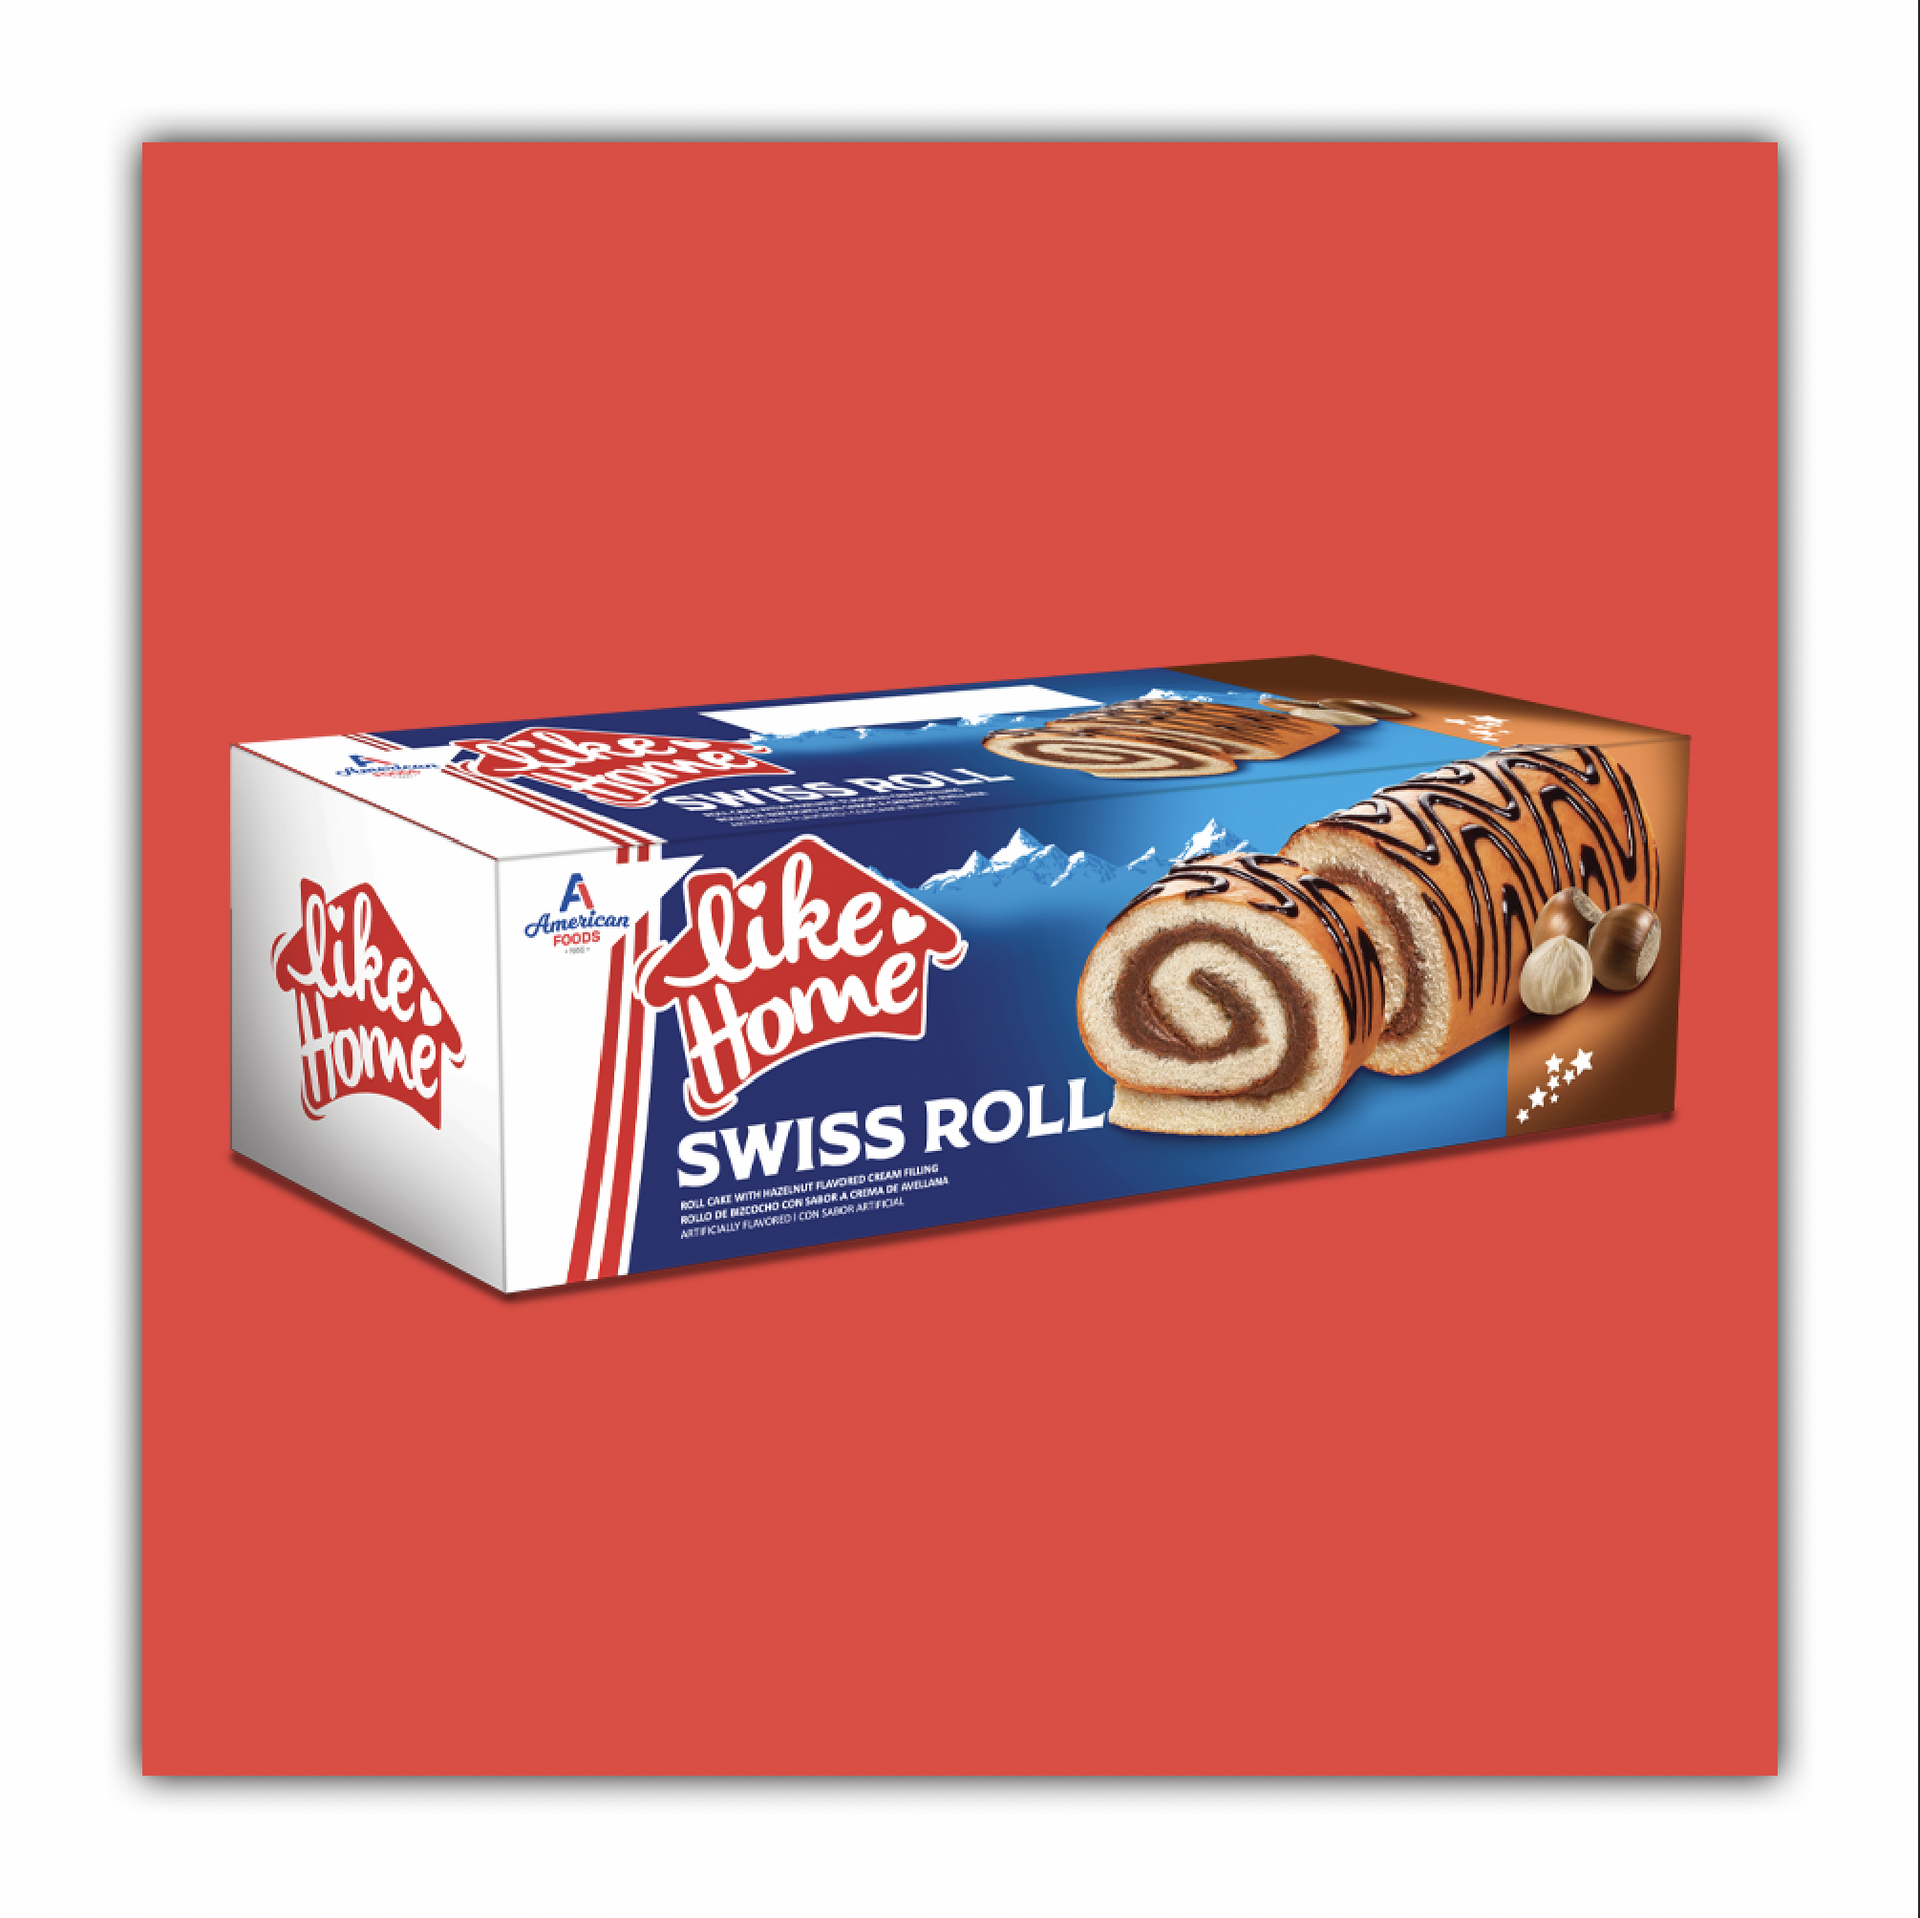 Like-Home-Swiss-Roll-Hazelnut